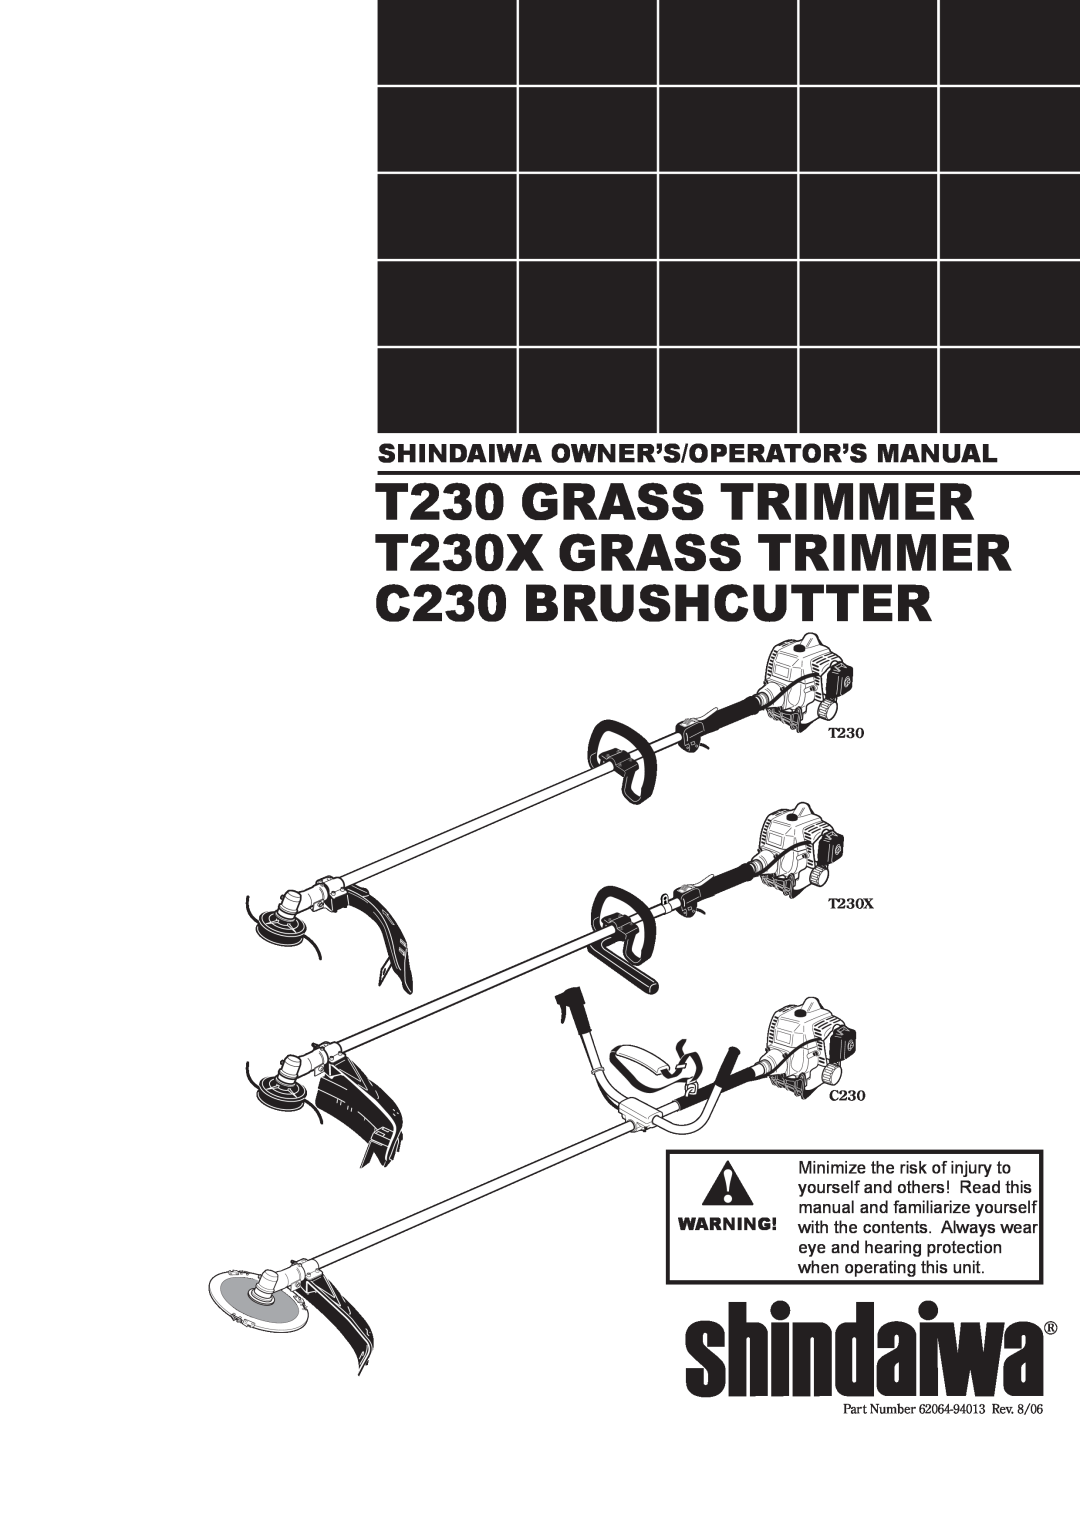 Shindaiwa manual Shindaiwa Owner’S/Operator’S Manual, T230 GRASS TRIMMER T230X GRASS TRIMMER C230 BRUSHCUTTER, English 